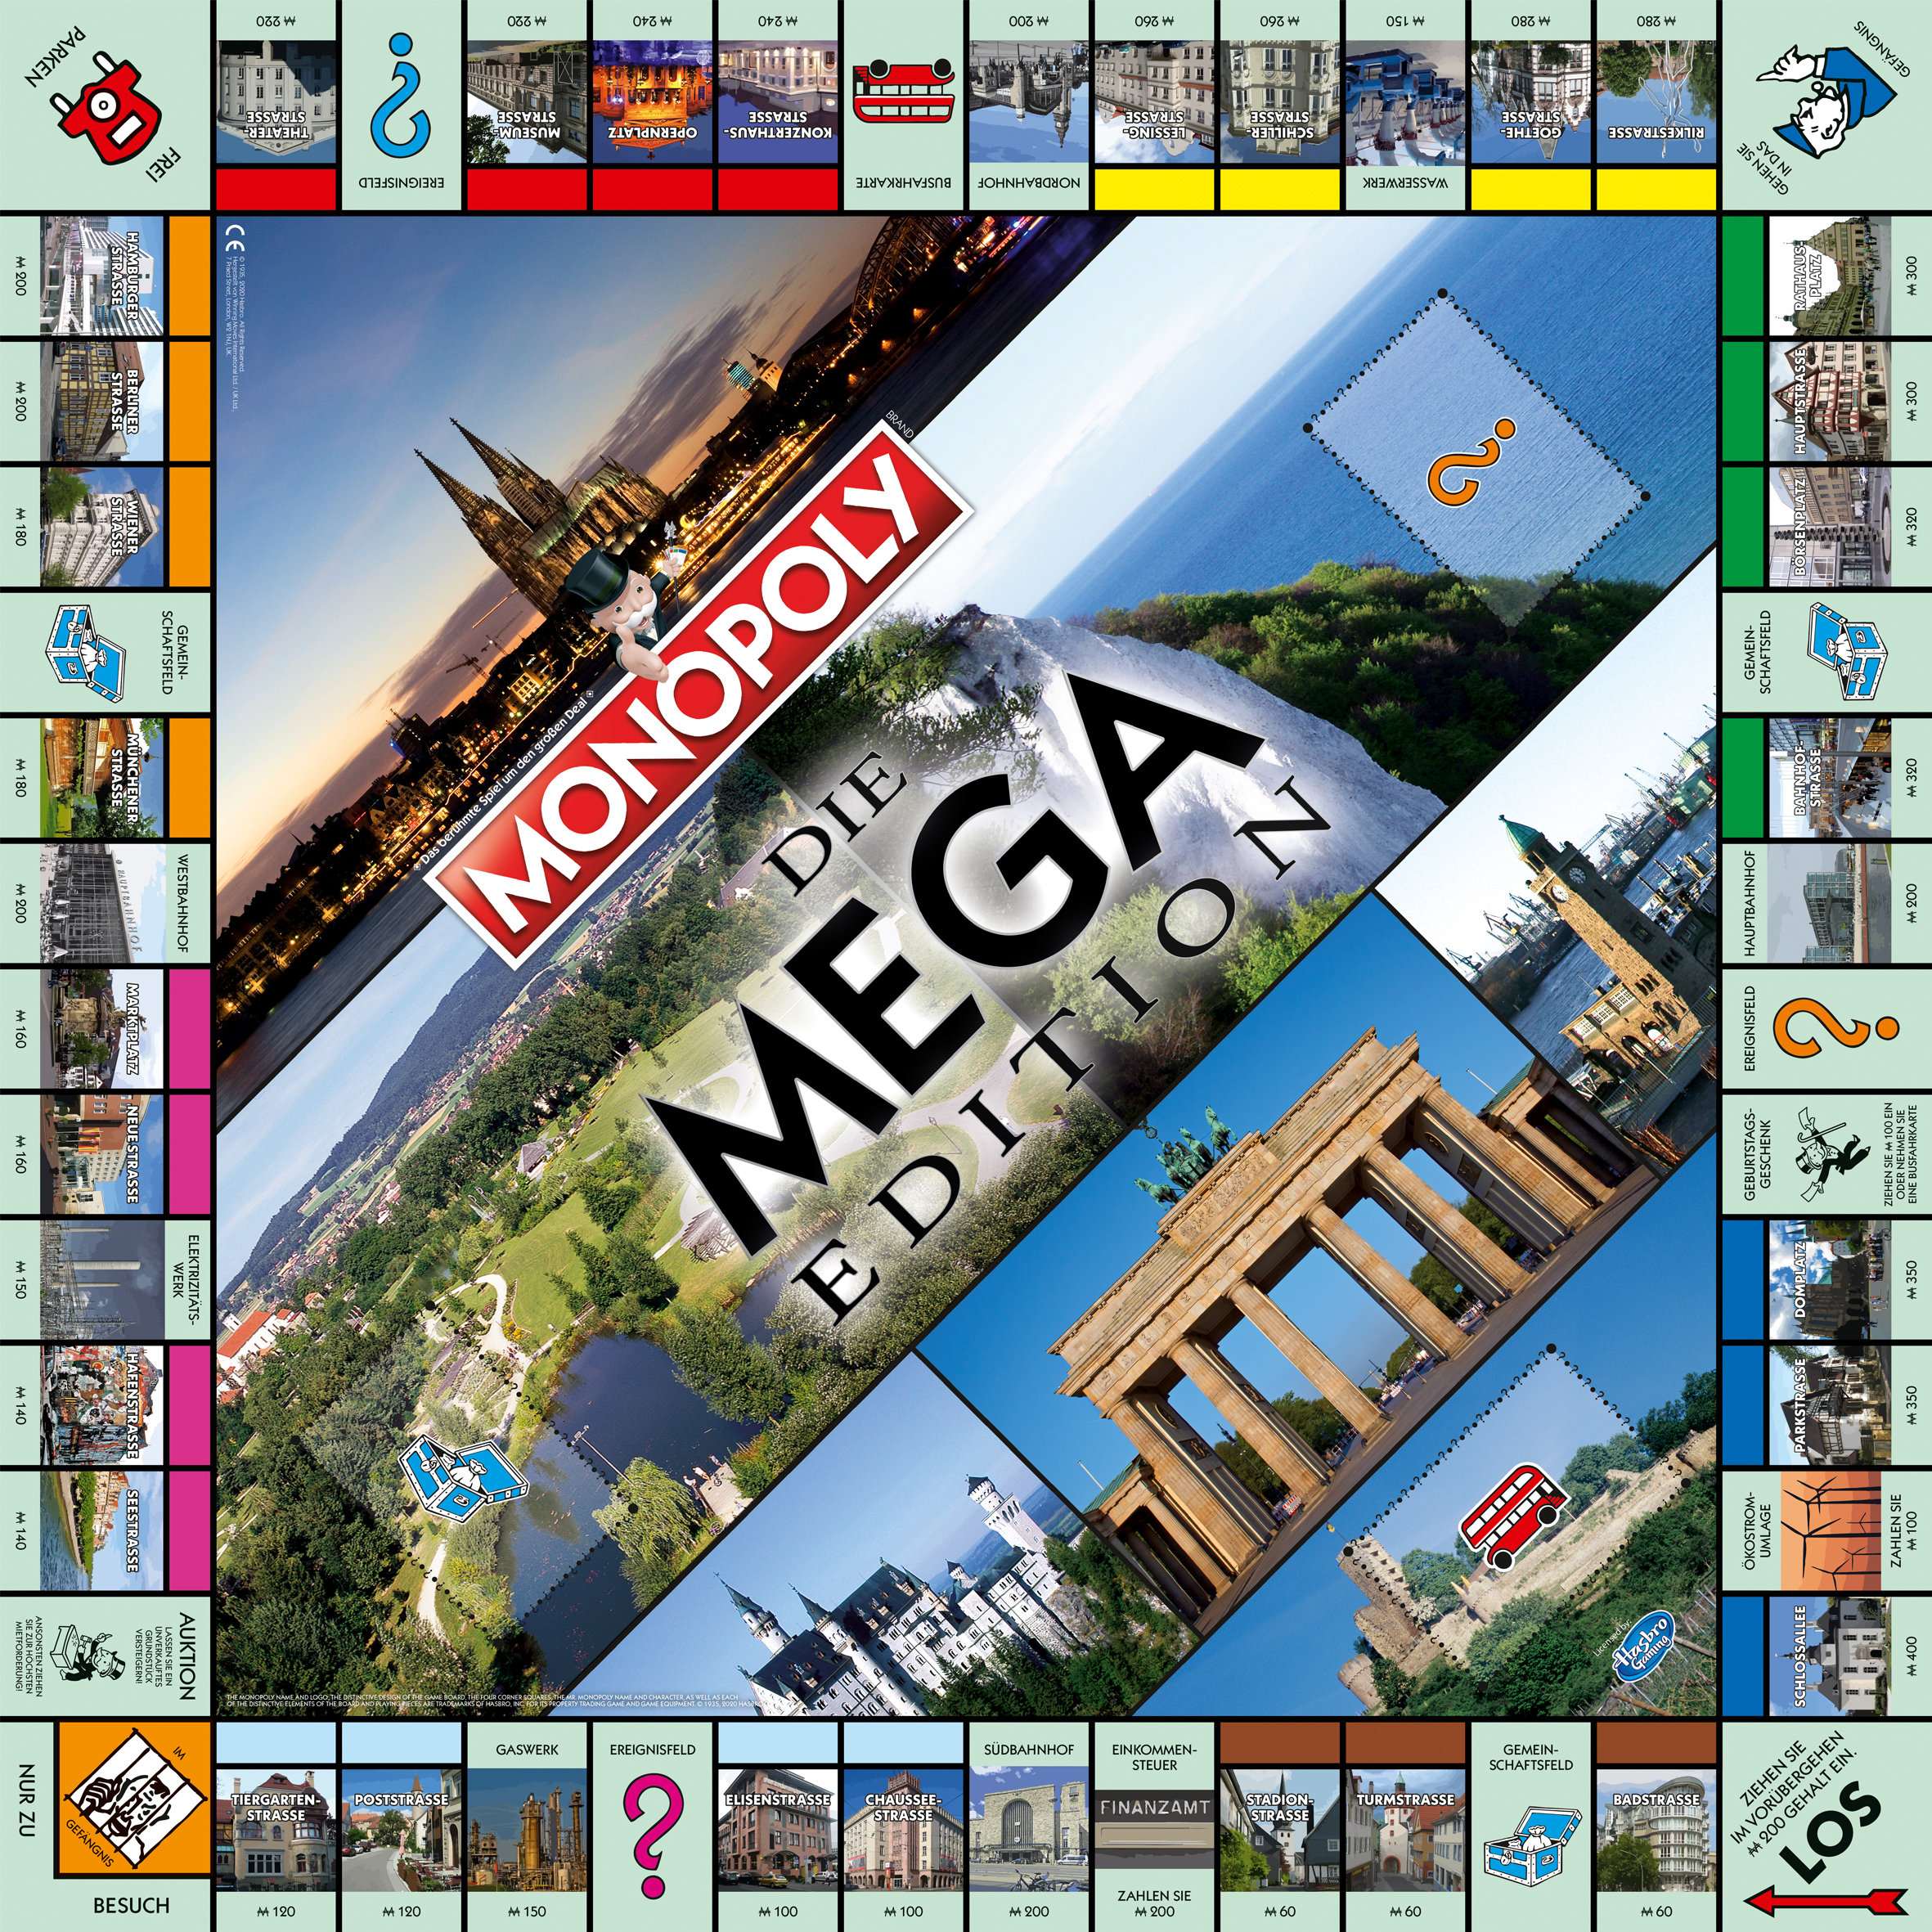 Monopoly Mega 2nd Edition